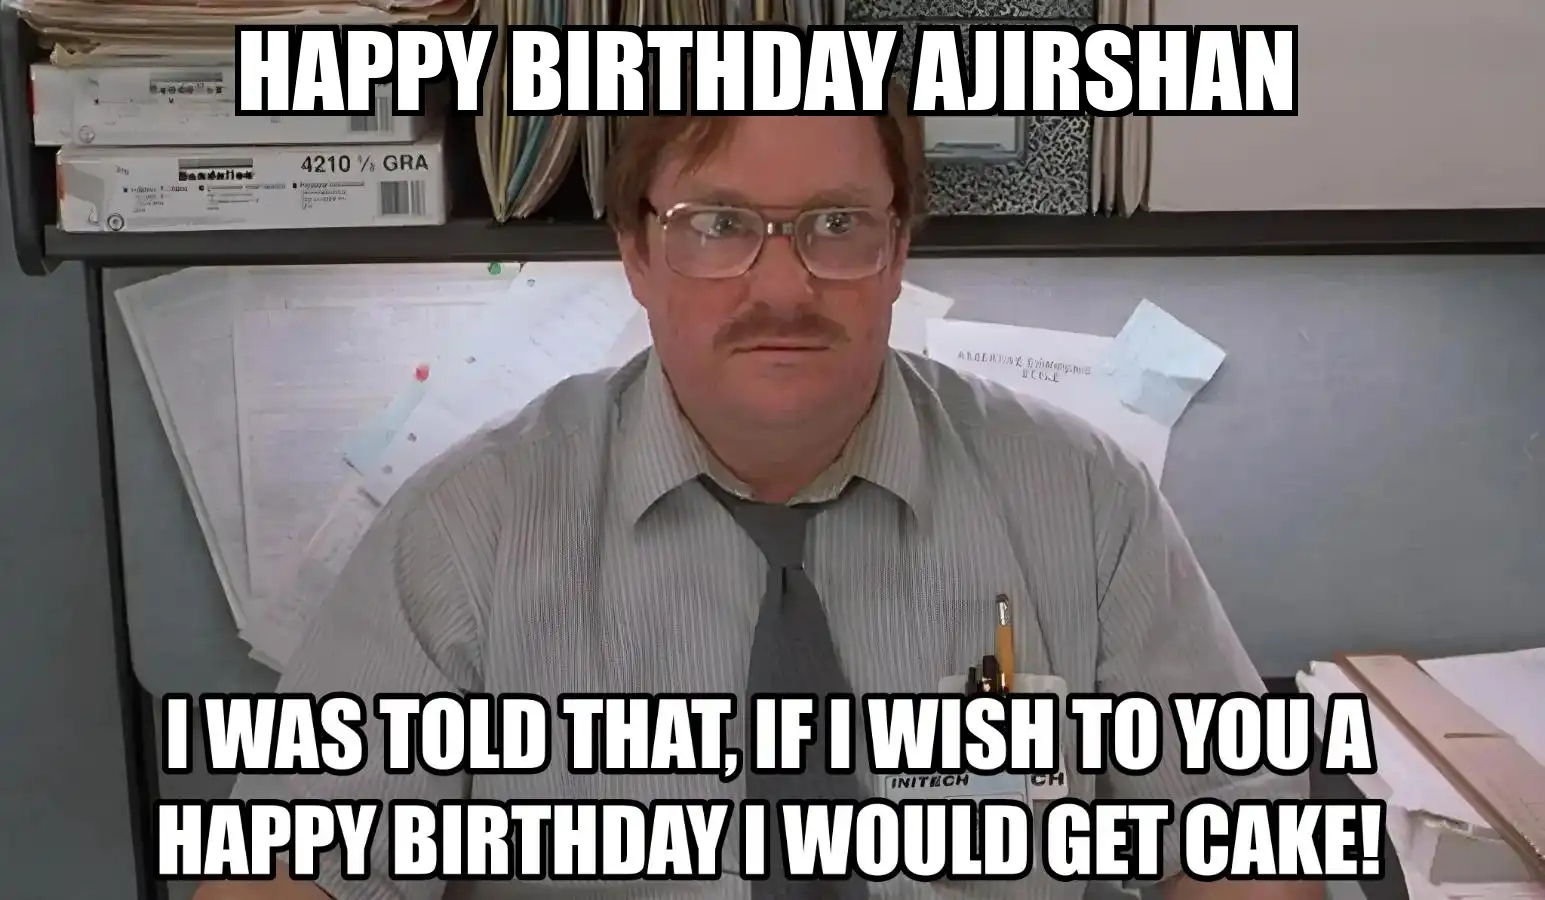 Happy Birthday Ajirshan I Would Get A Cake Meme